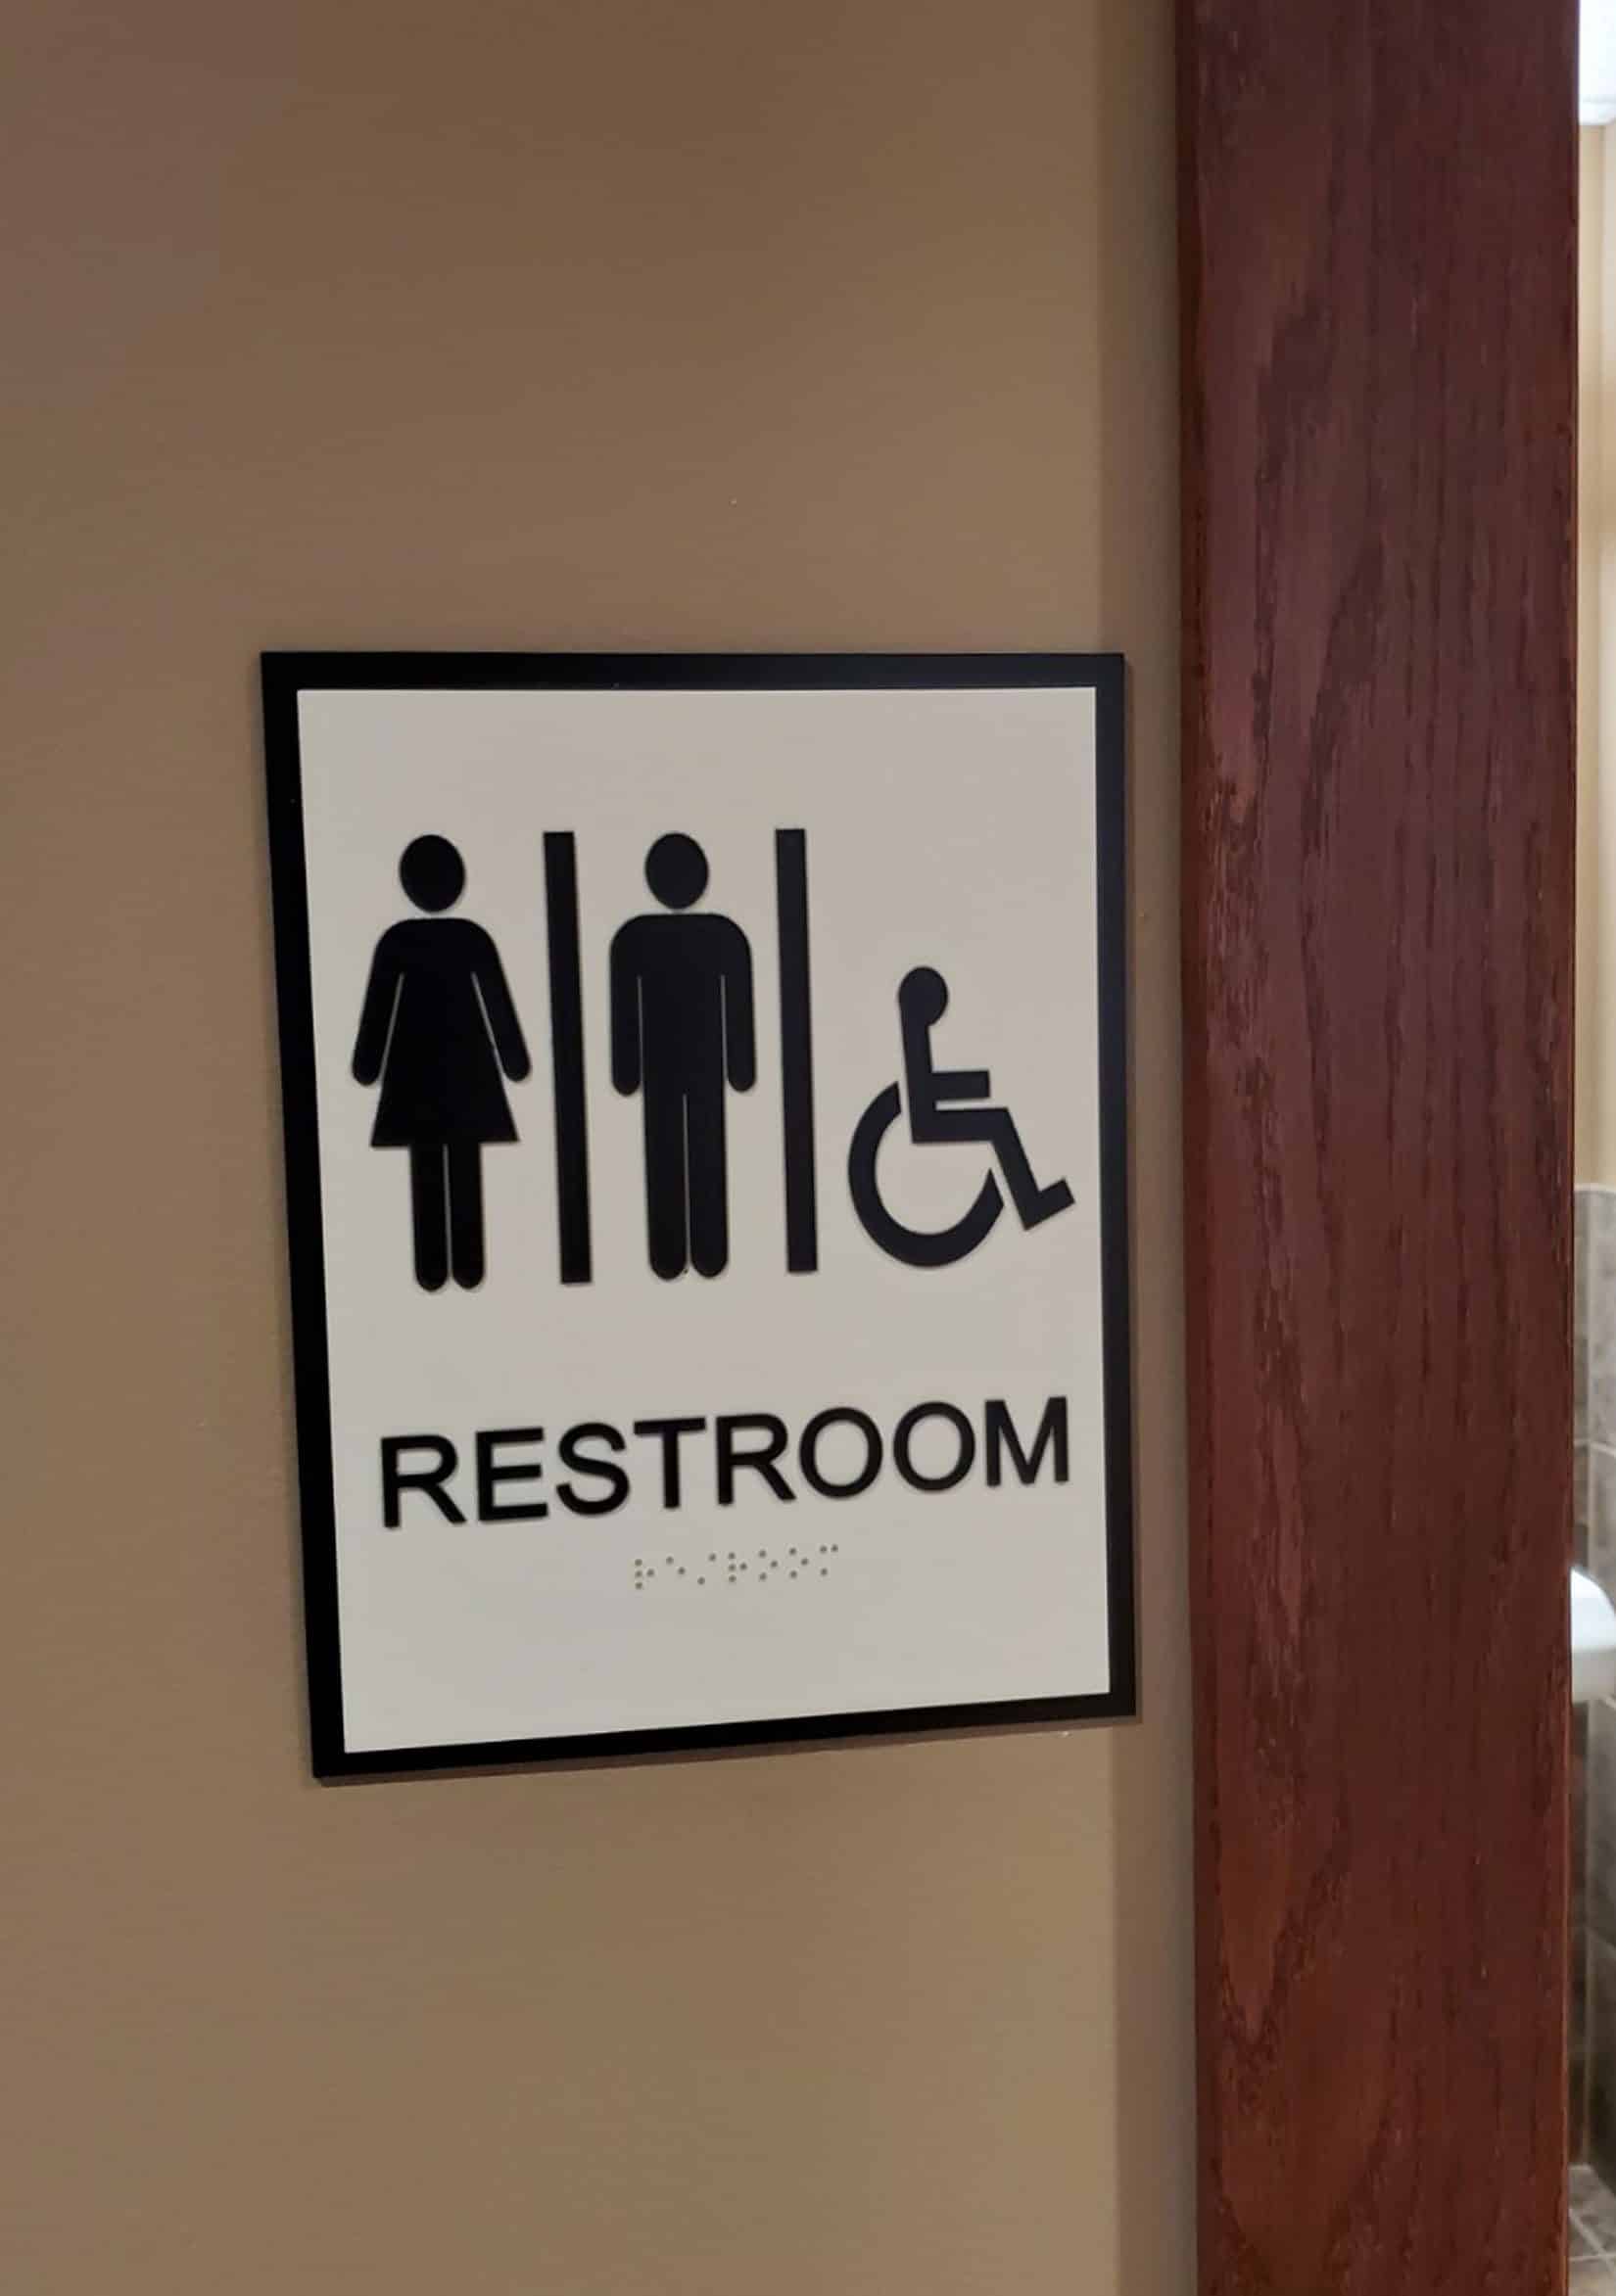 Restroom sign installed in commercial building.